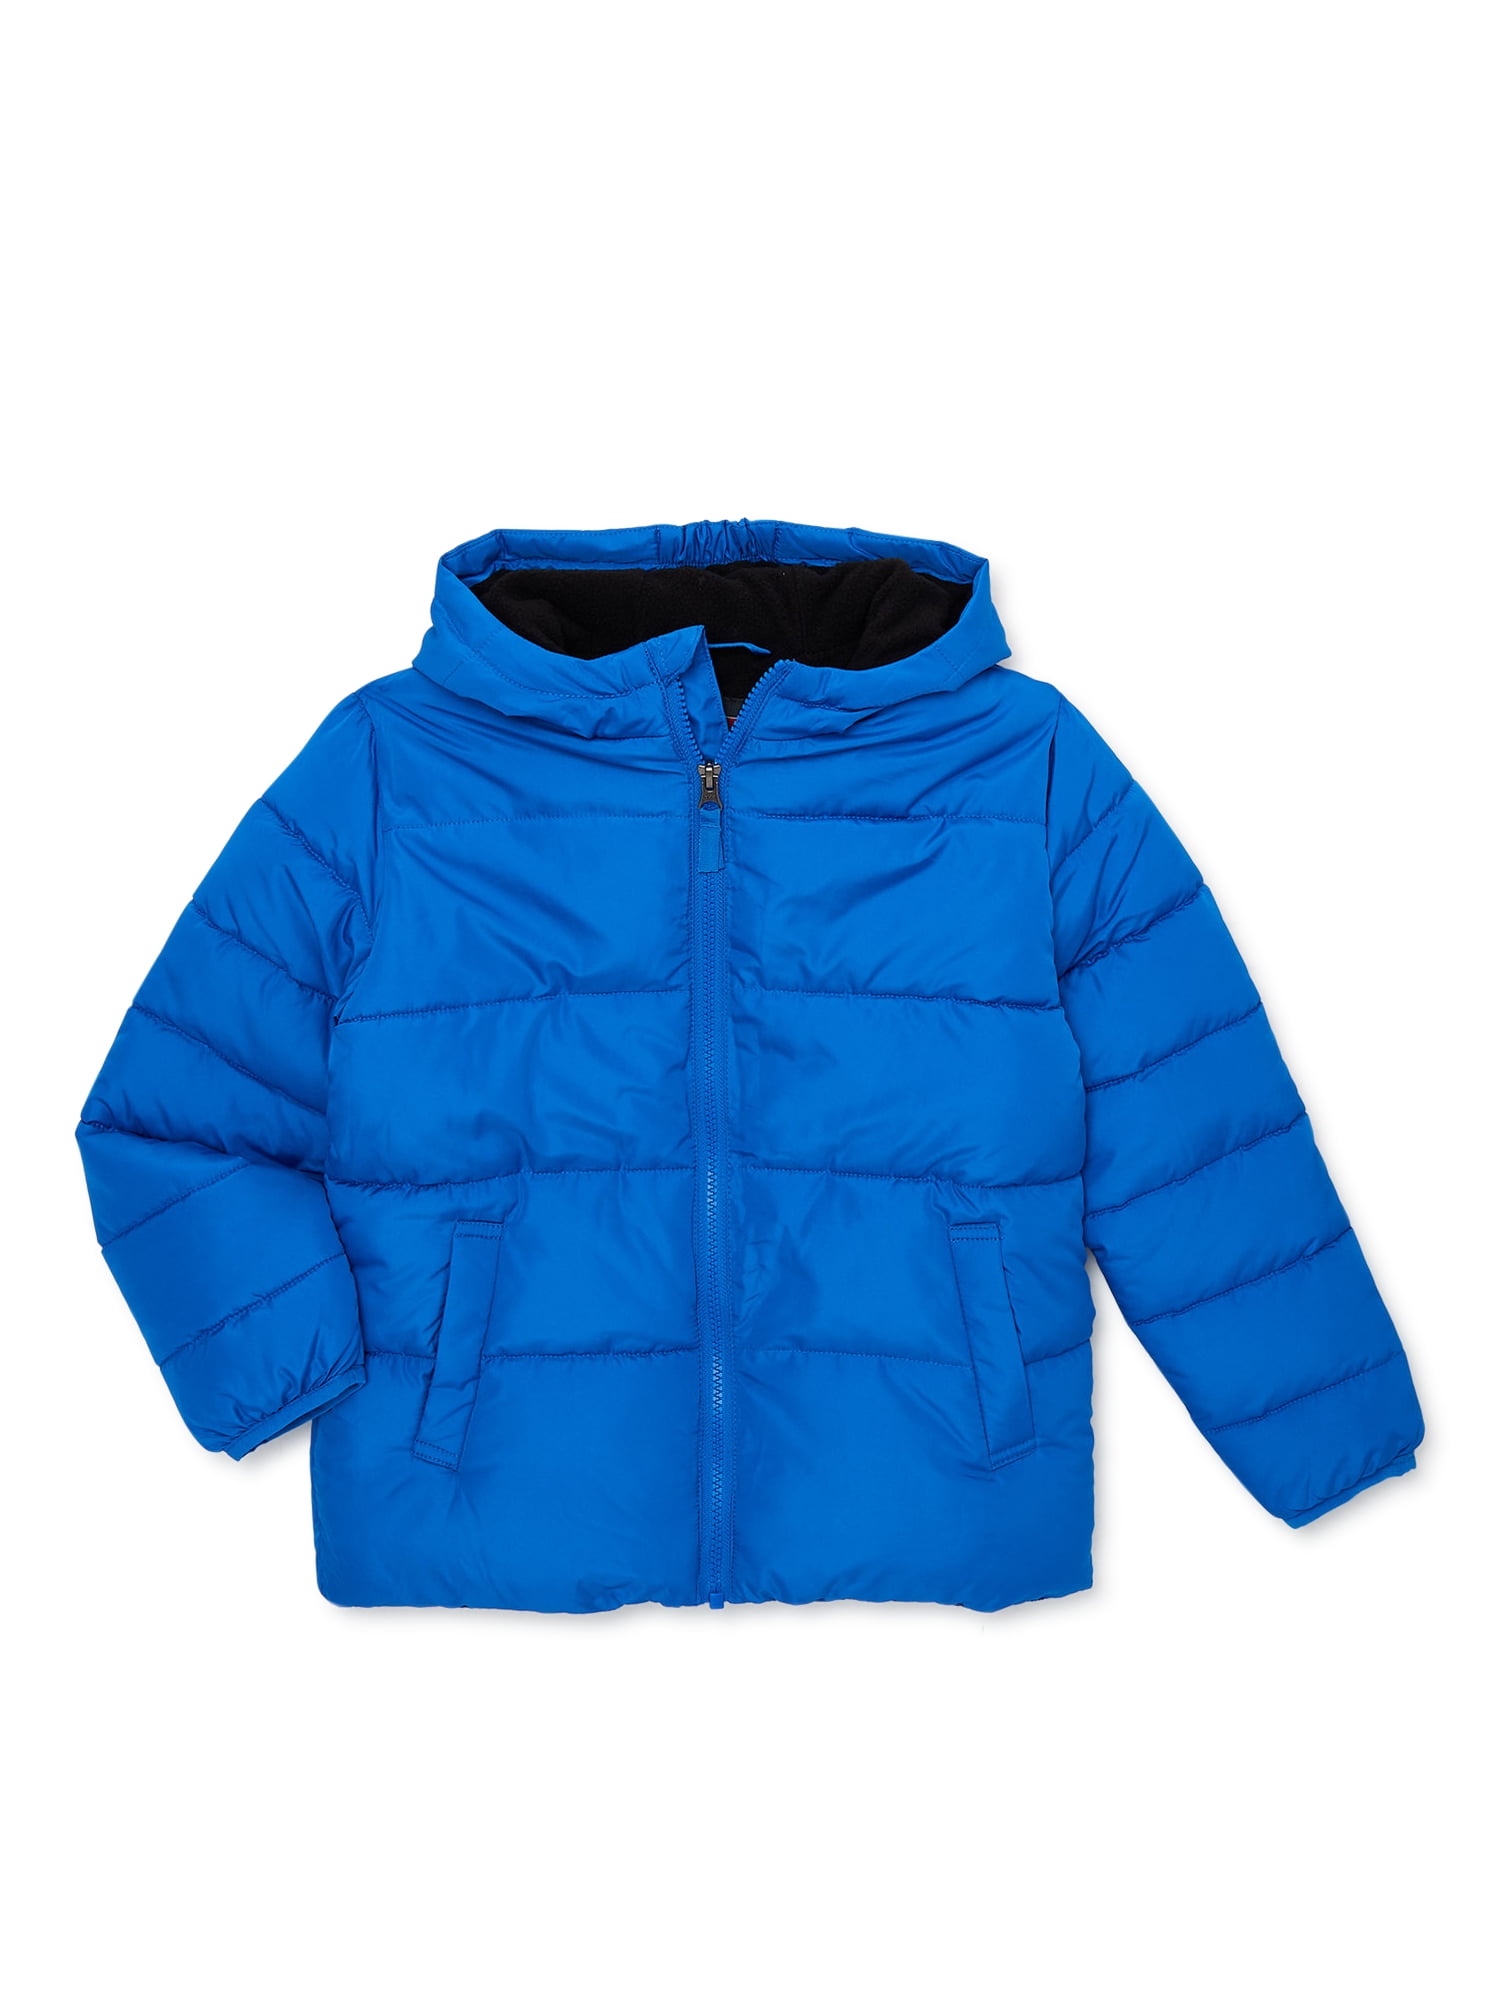 Swiss Tech Boys Winter Puffer Jacket with Hood, Sizes 4-18 & Husky ...